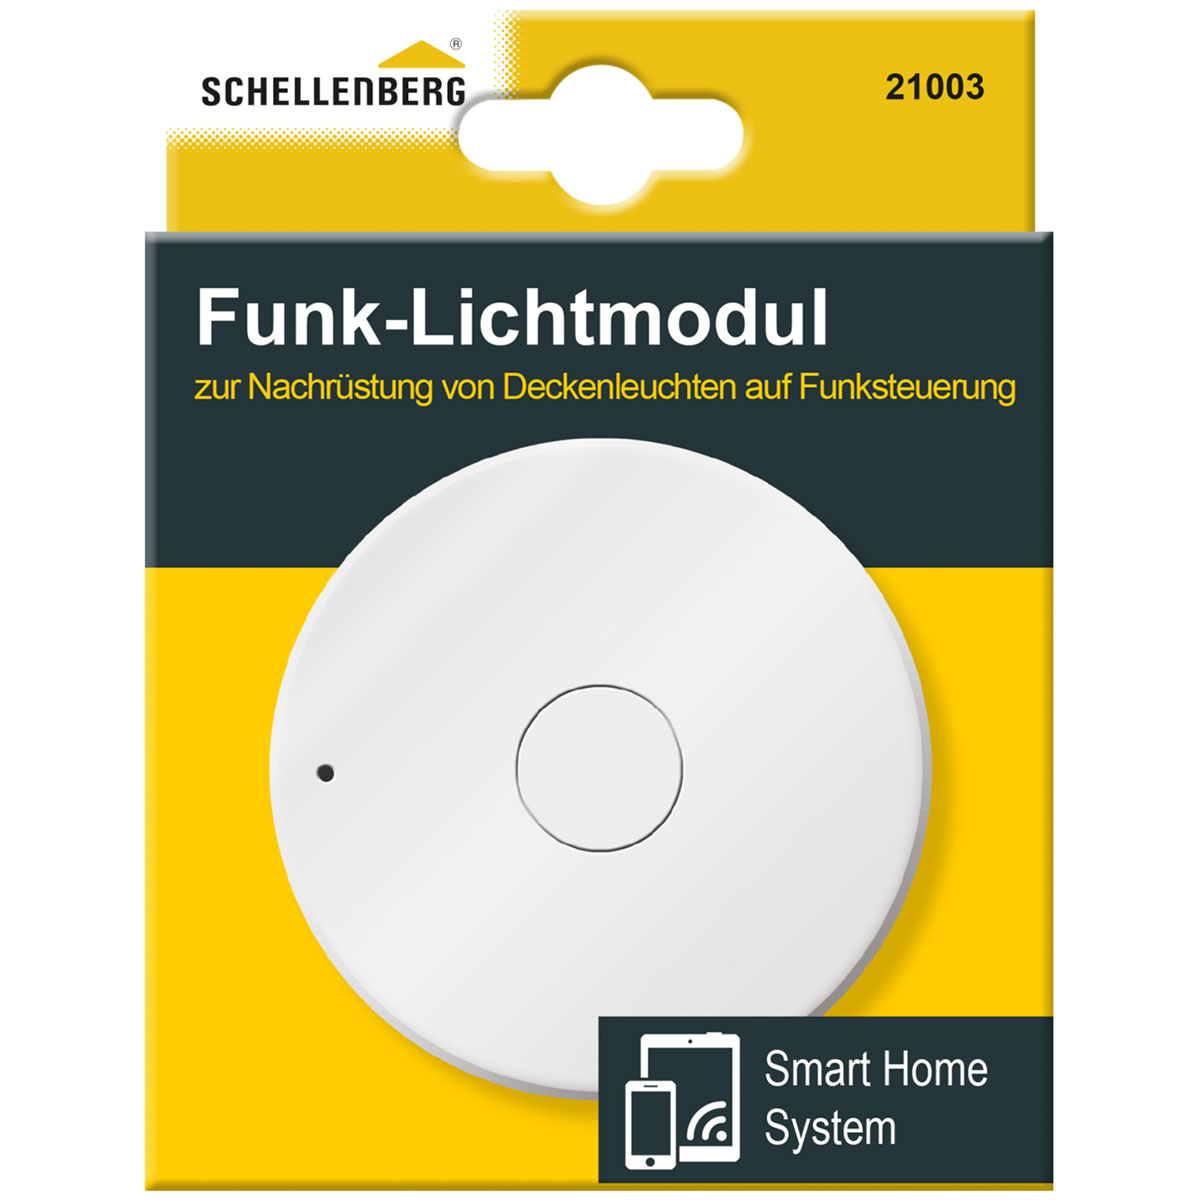 21003-funk-lichtmodul-verpackung